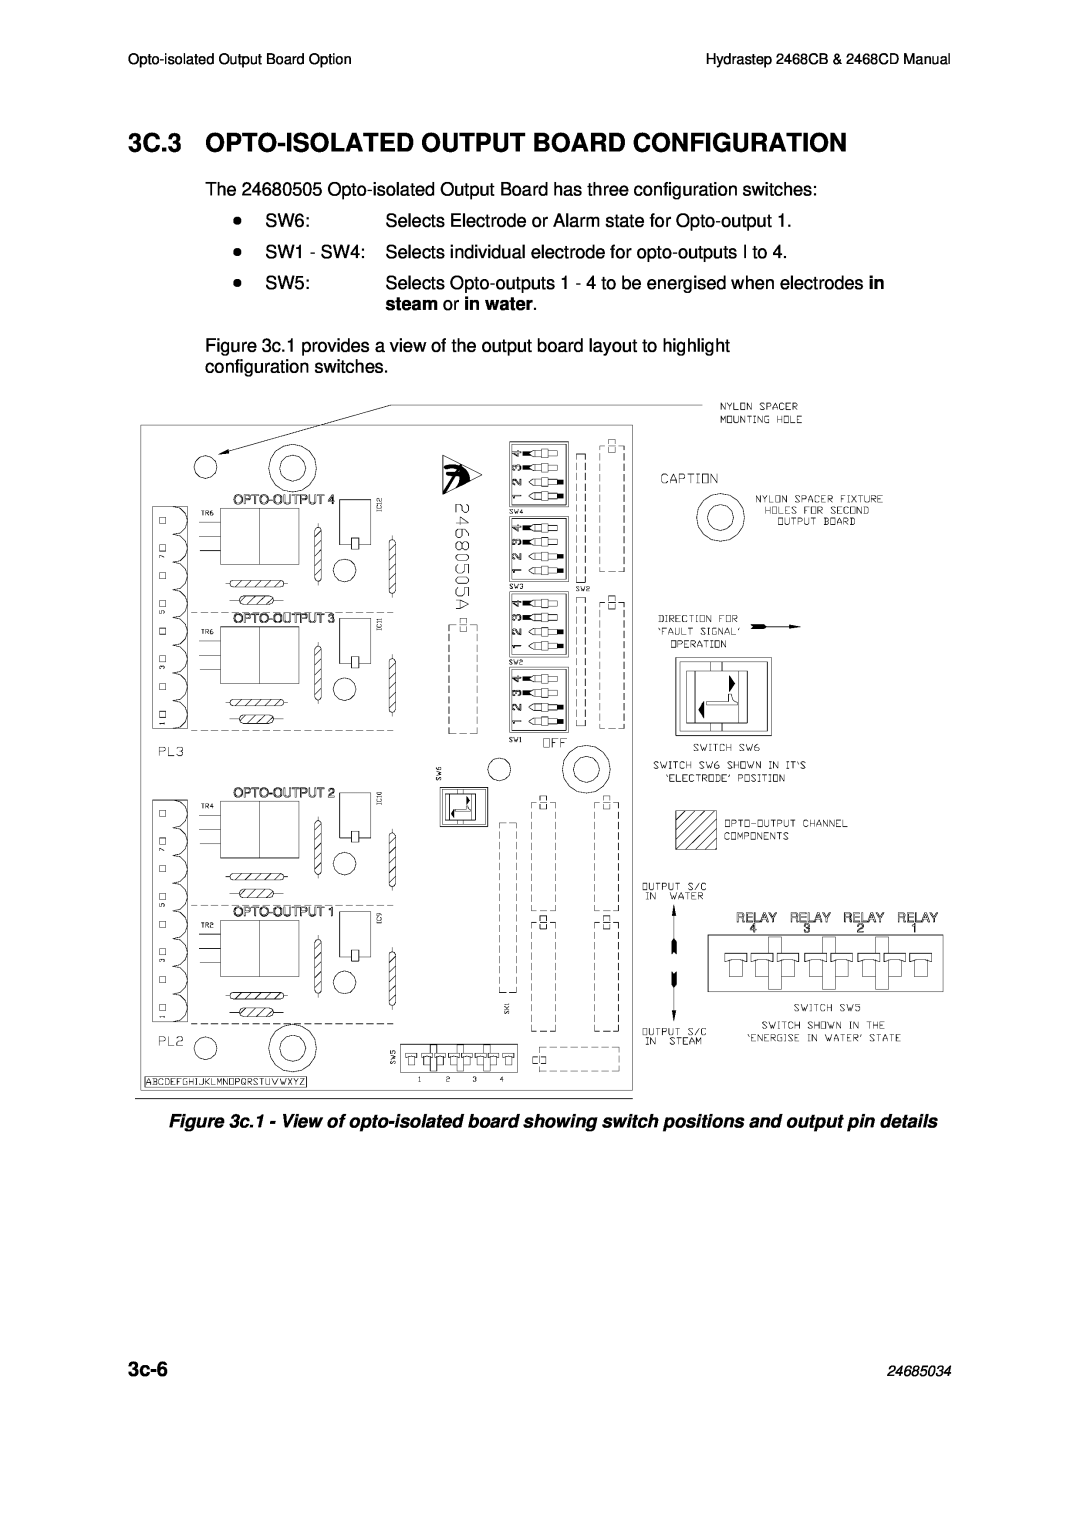 Emerson 2468CB, 2468CD manual 3C.3 OPTO-ISOLATEDOUTPUT BOARD CONFIGURATION, 3c-6 